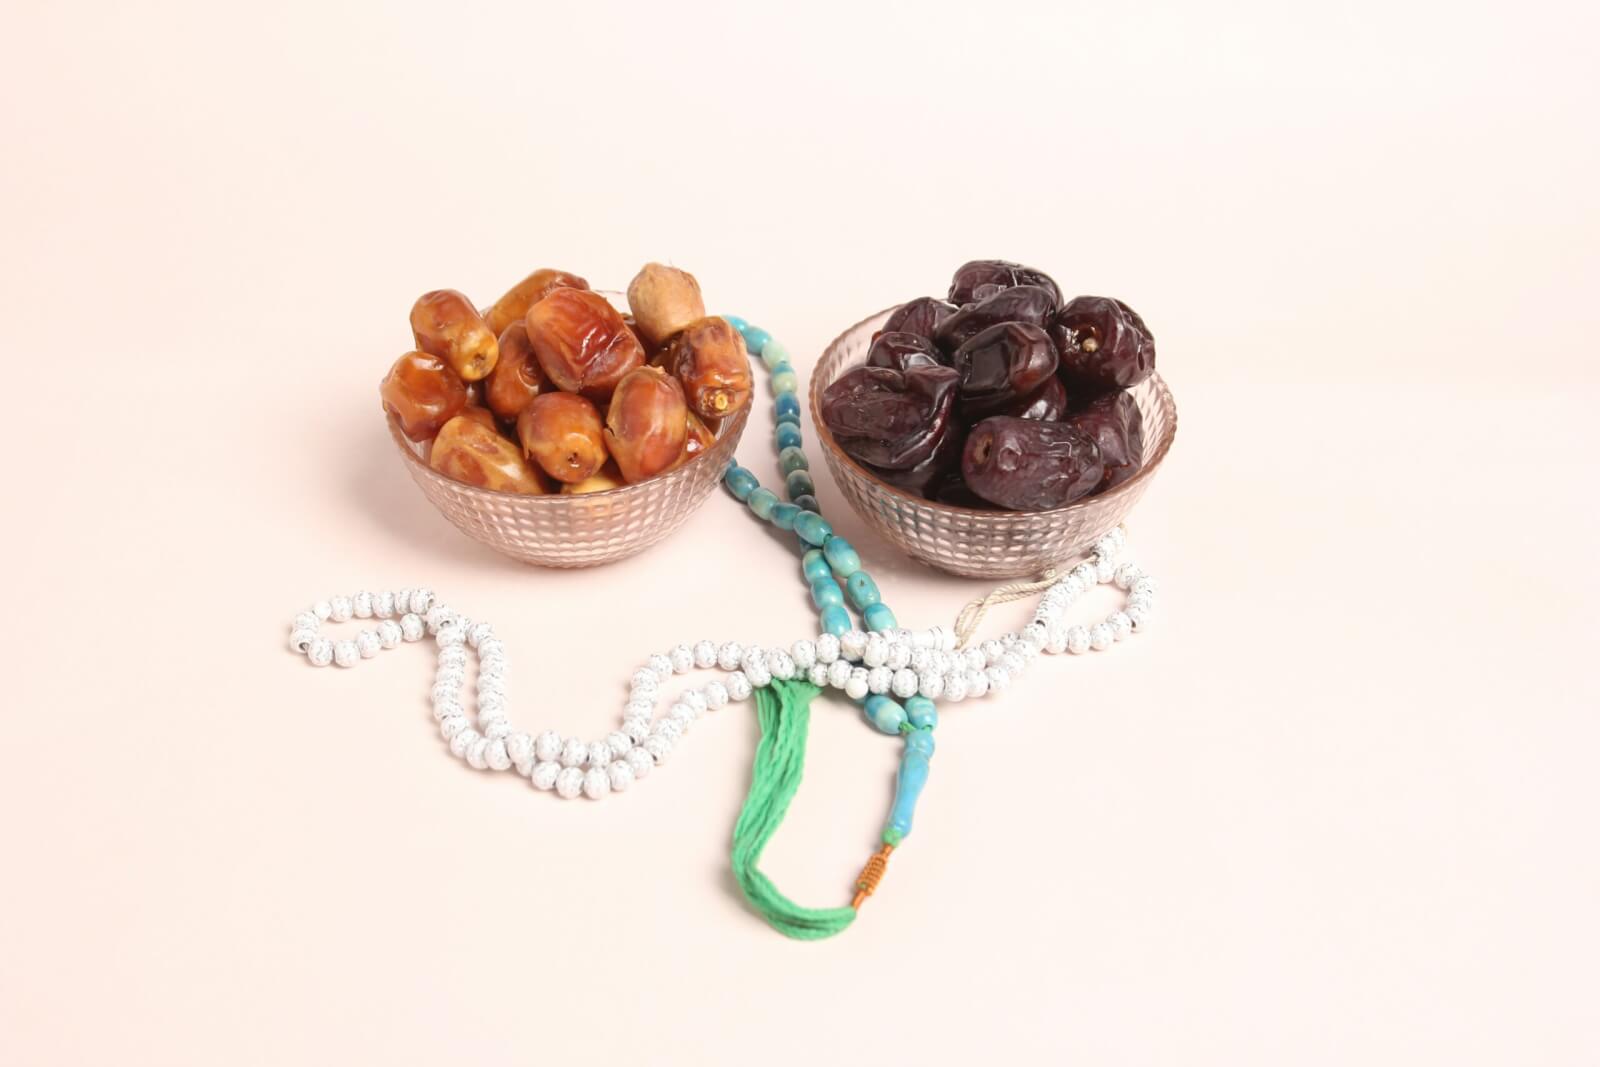 Dates & Prayer Beads